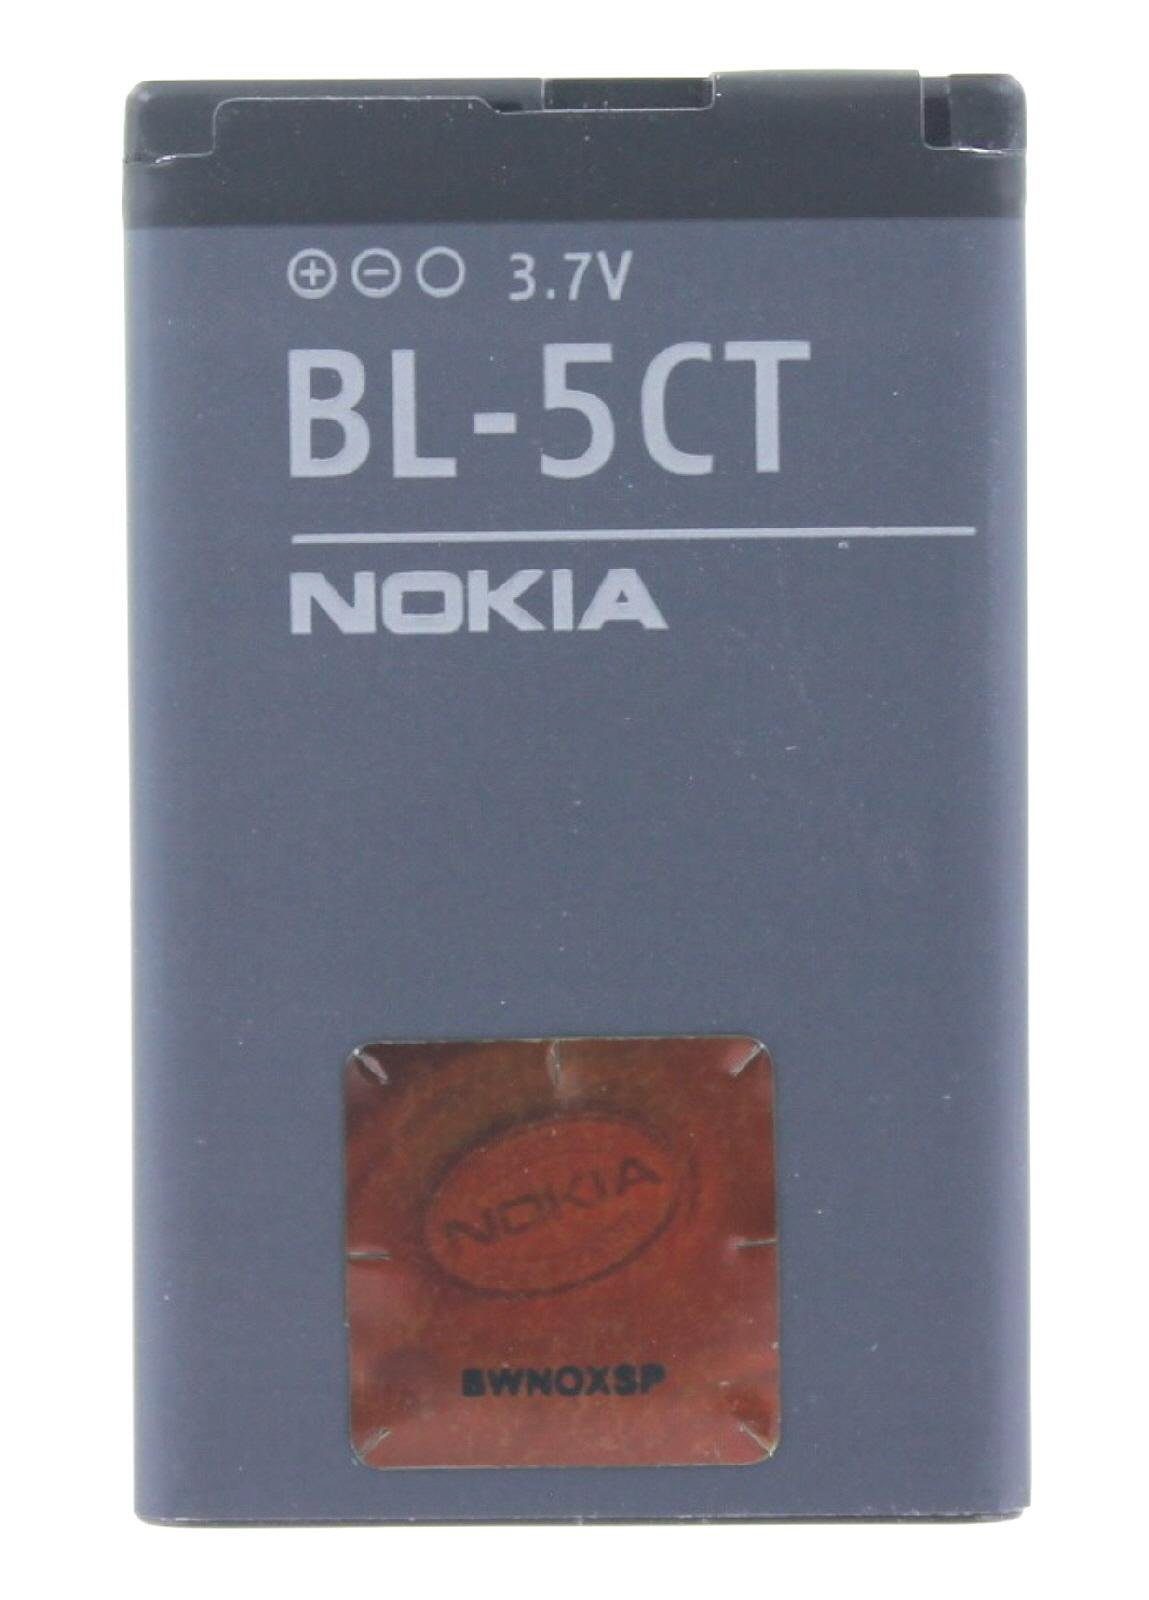 Nokia 1050 Original RM-645 für mAh Nokia Akkupacks Akku Akku